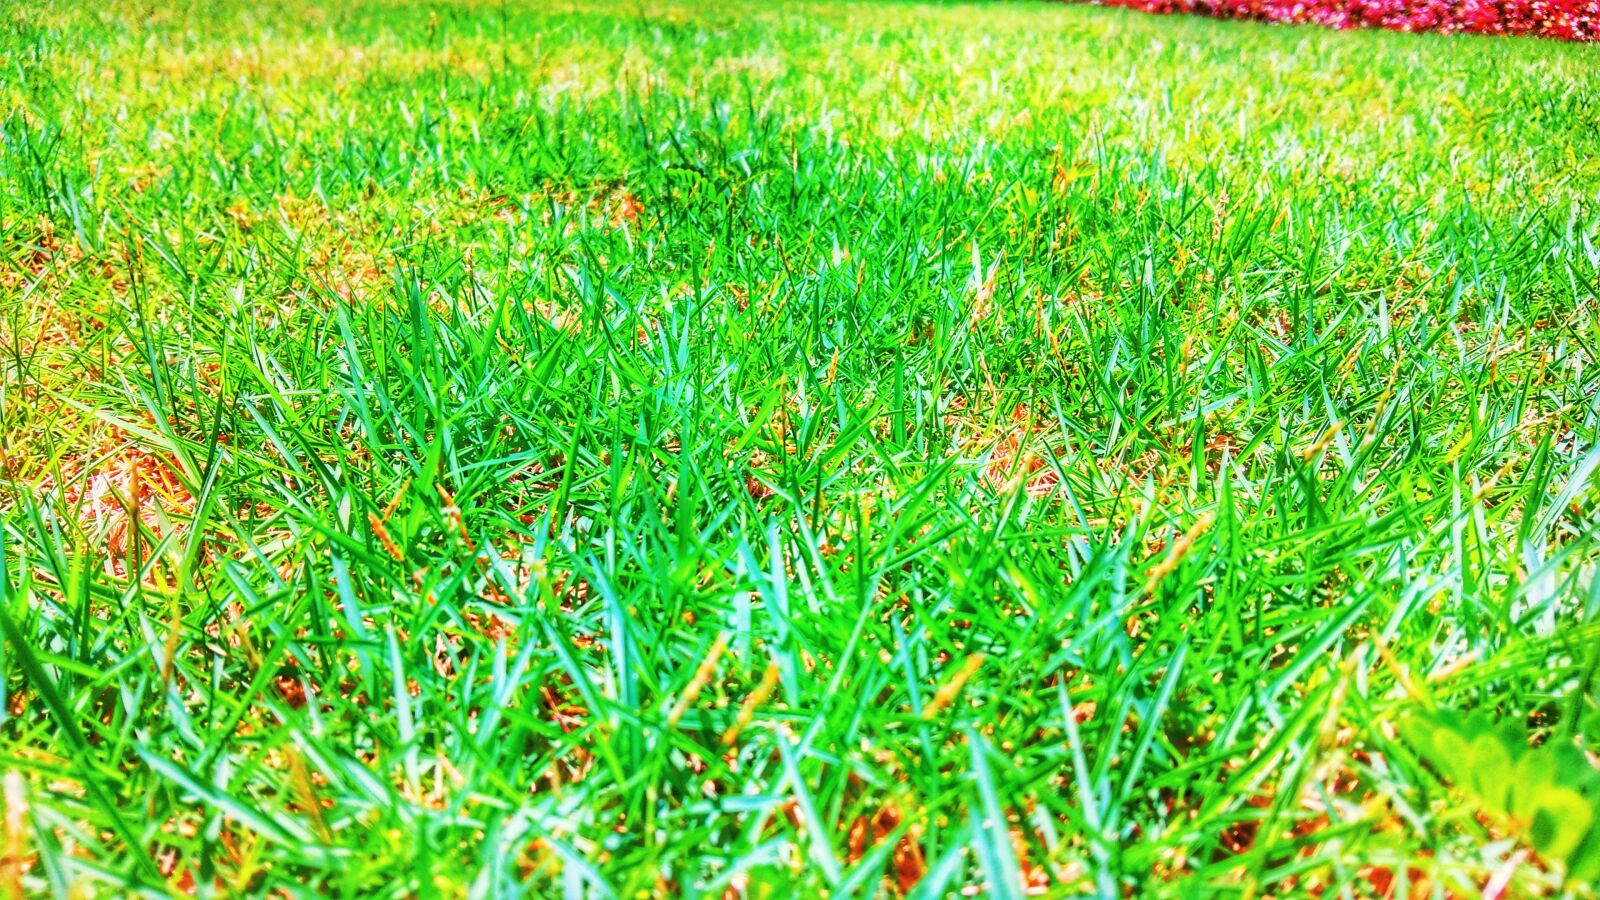 vivo 1724 sample photo. Grass, natural grass, grass photography